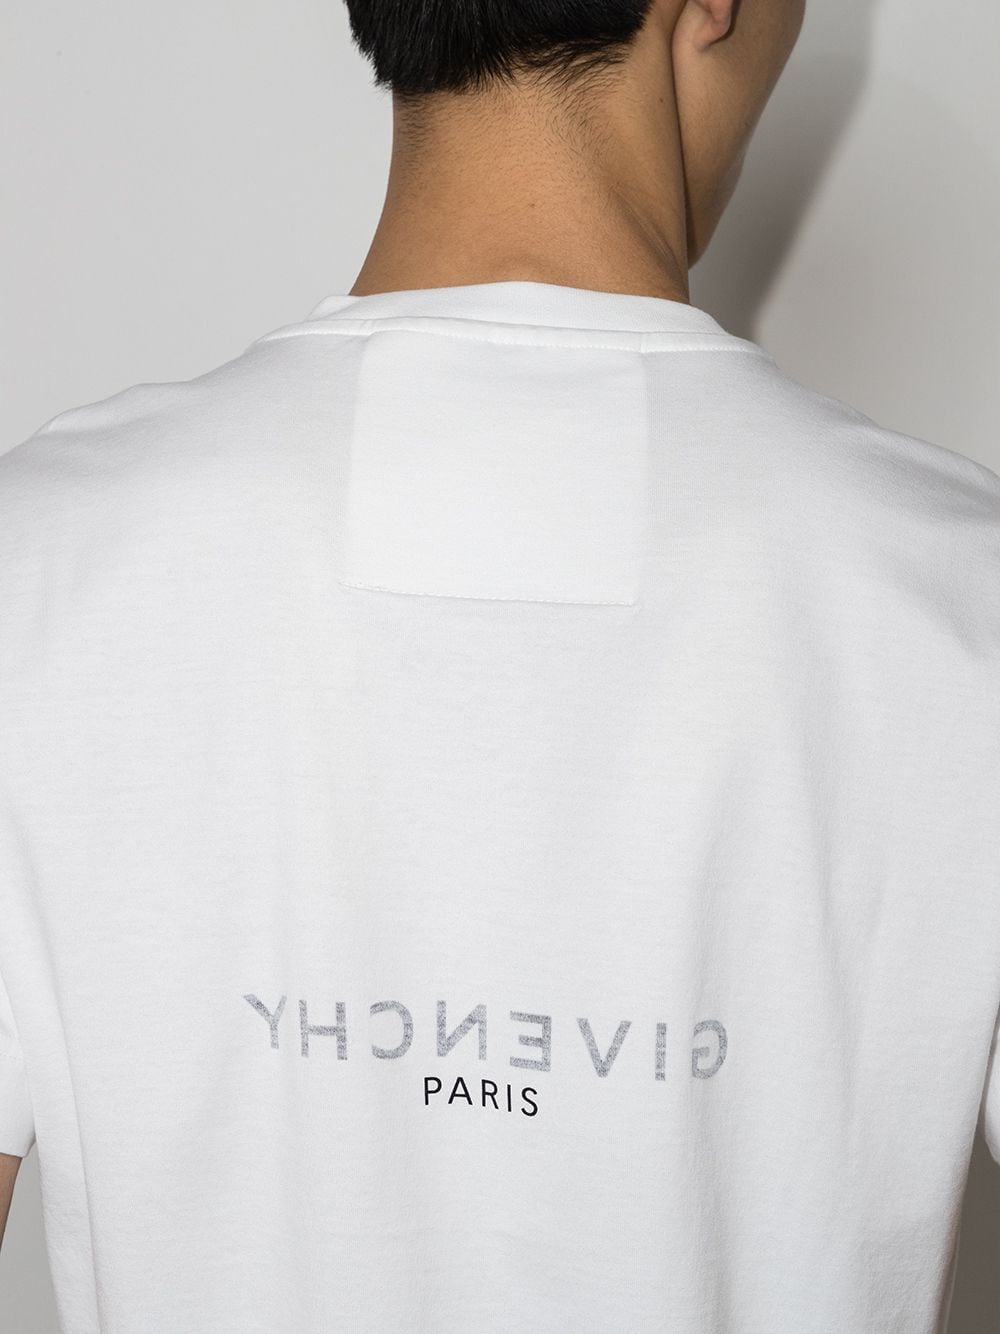 Givenchy Reverse Paris Logo Print T-Shirt in White